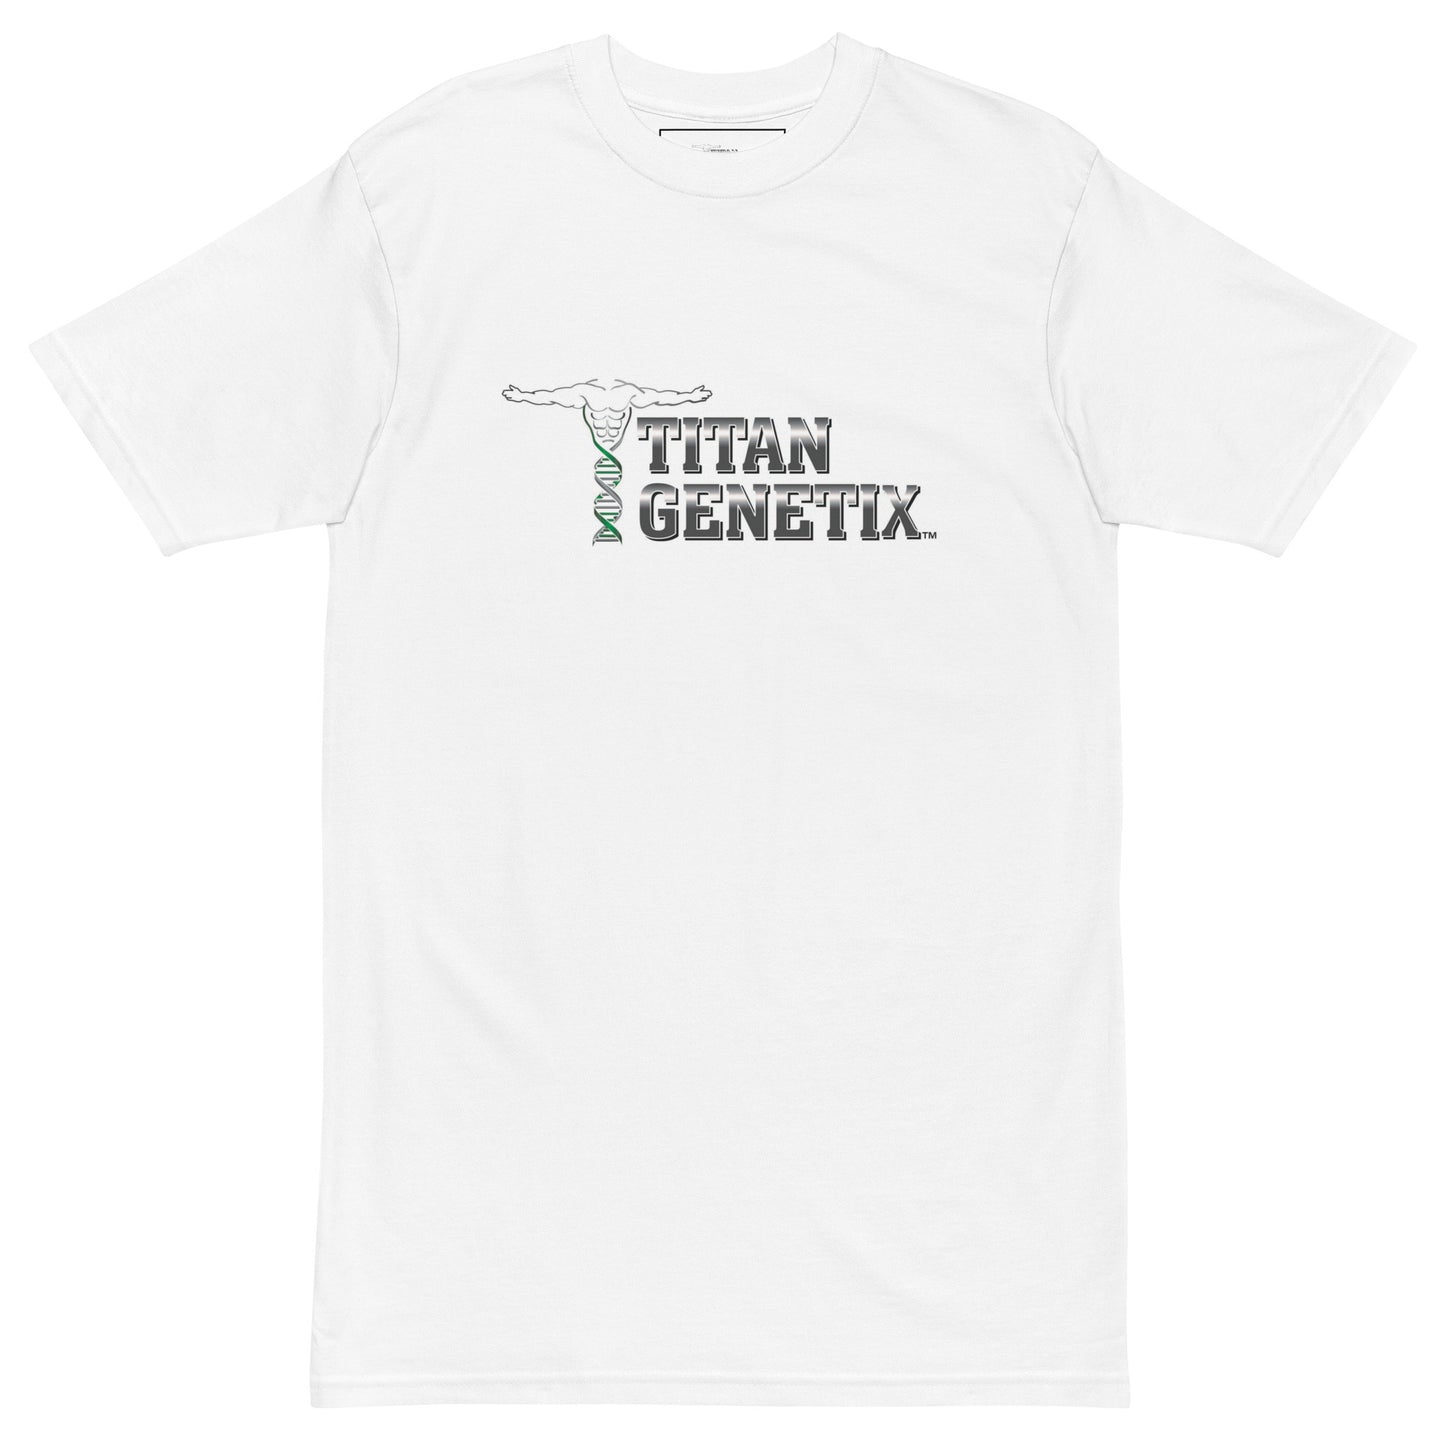 Titan Genetix - Men’s Premium White Tee